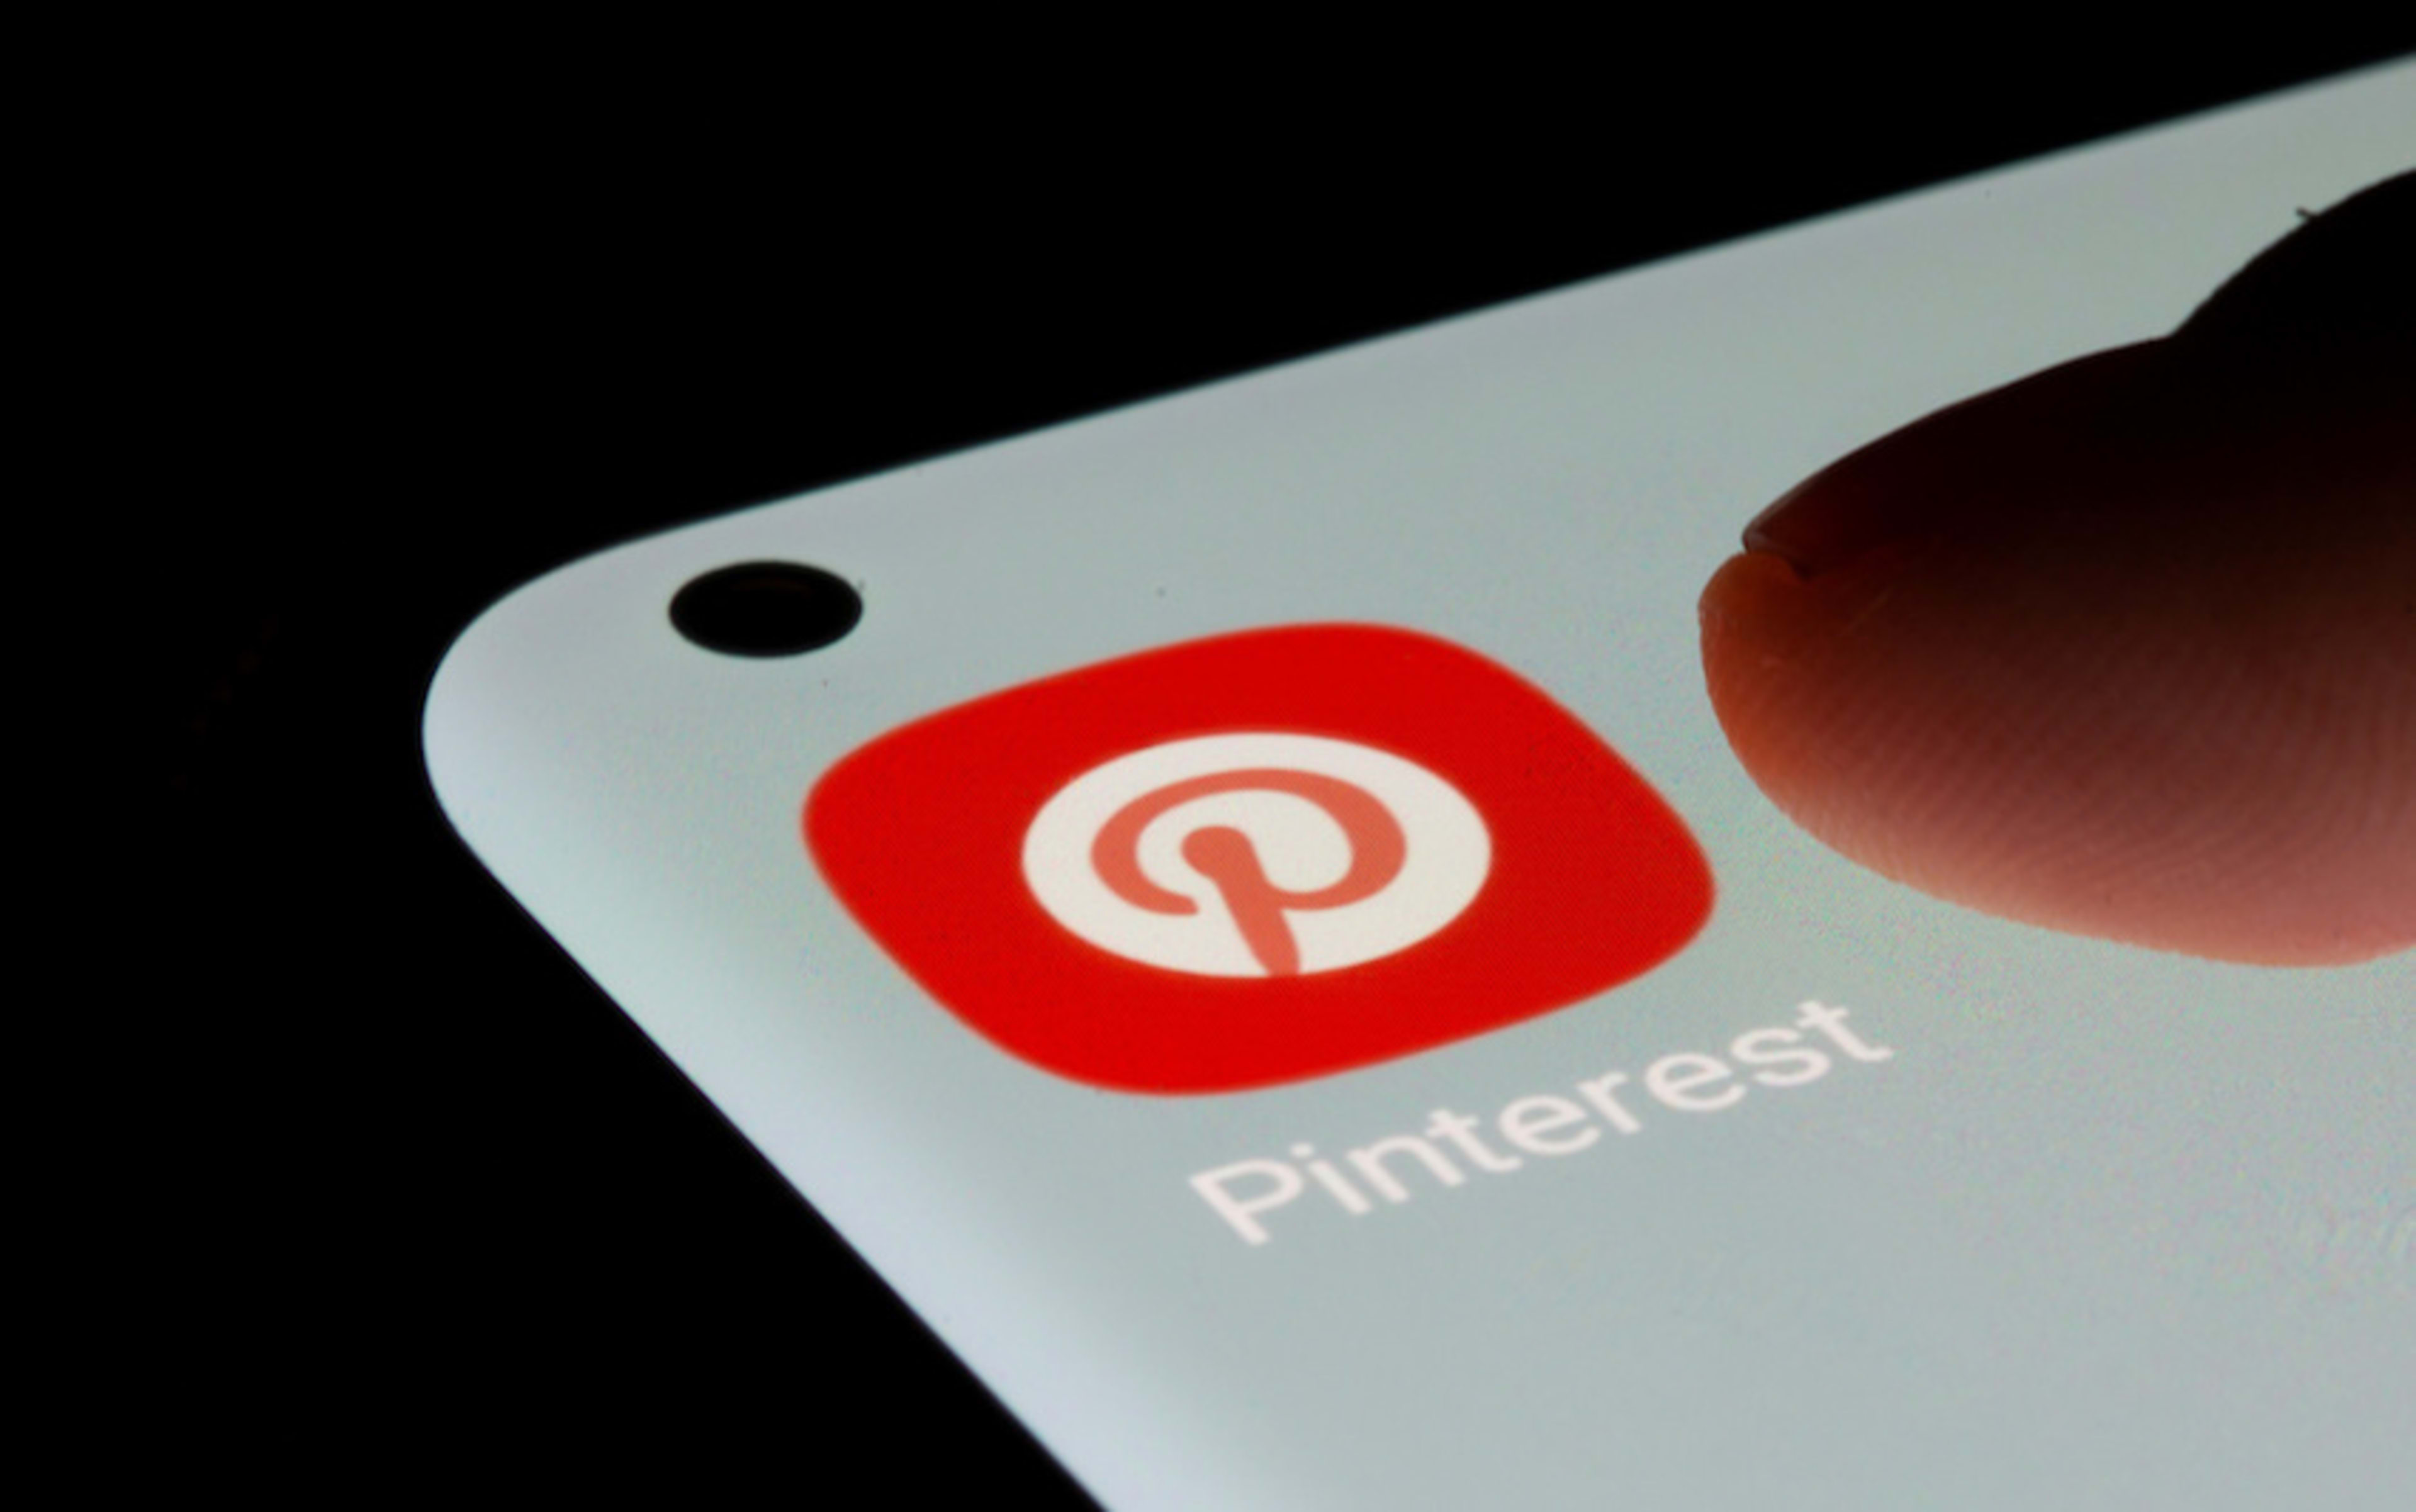 Pinterest stock price today: Shares drop despite platform’s popularity with Gen Z